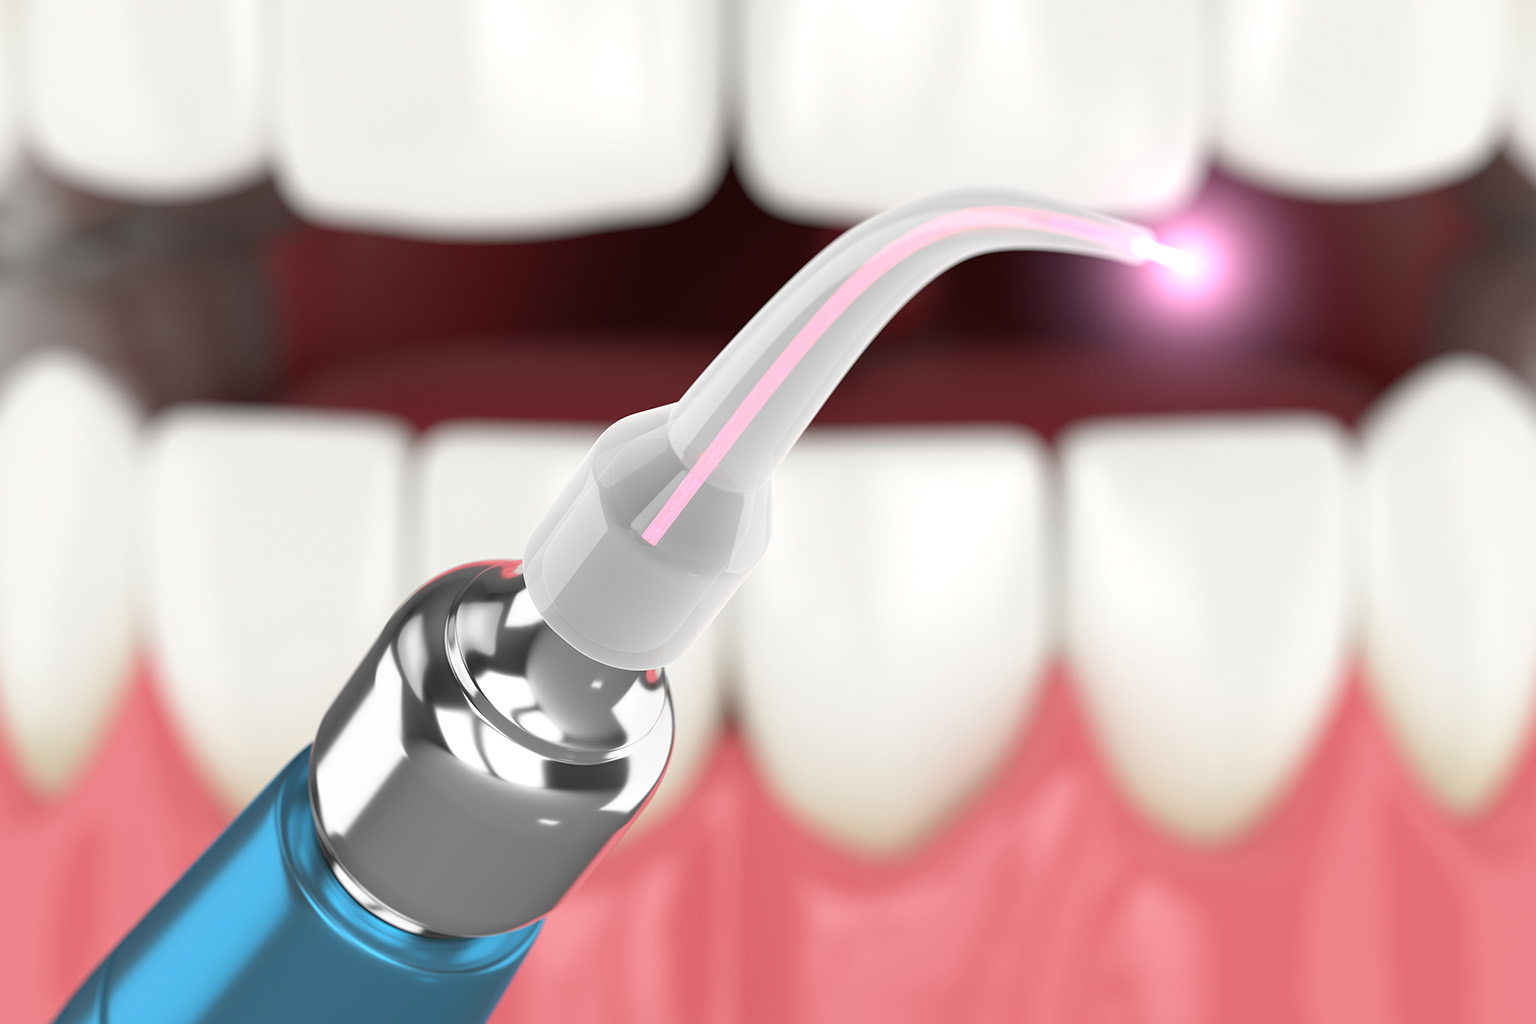 rendering of a laser teeth cleaning tool in front of teeth